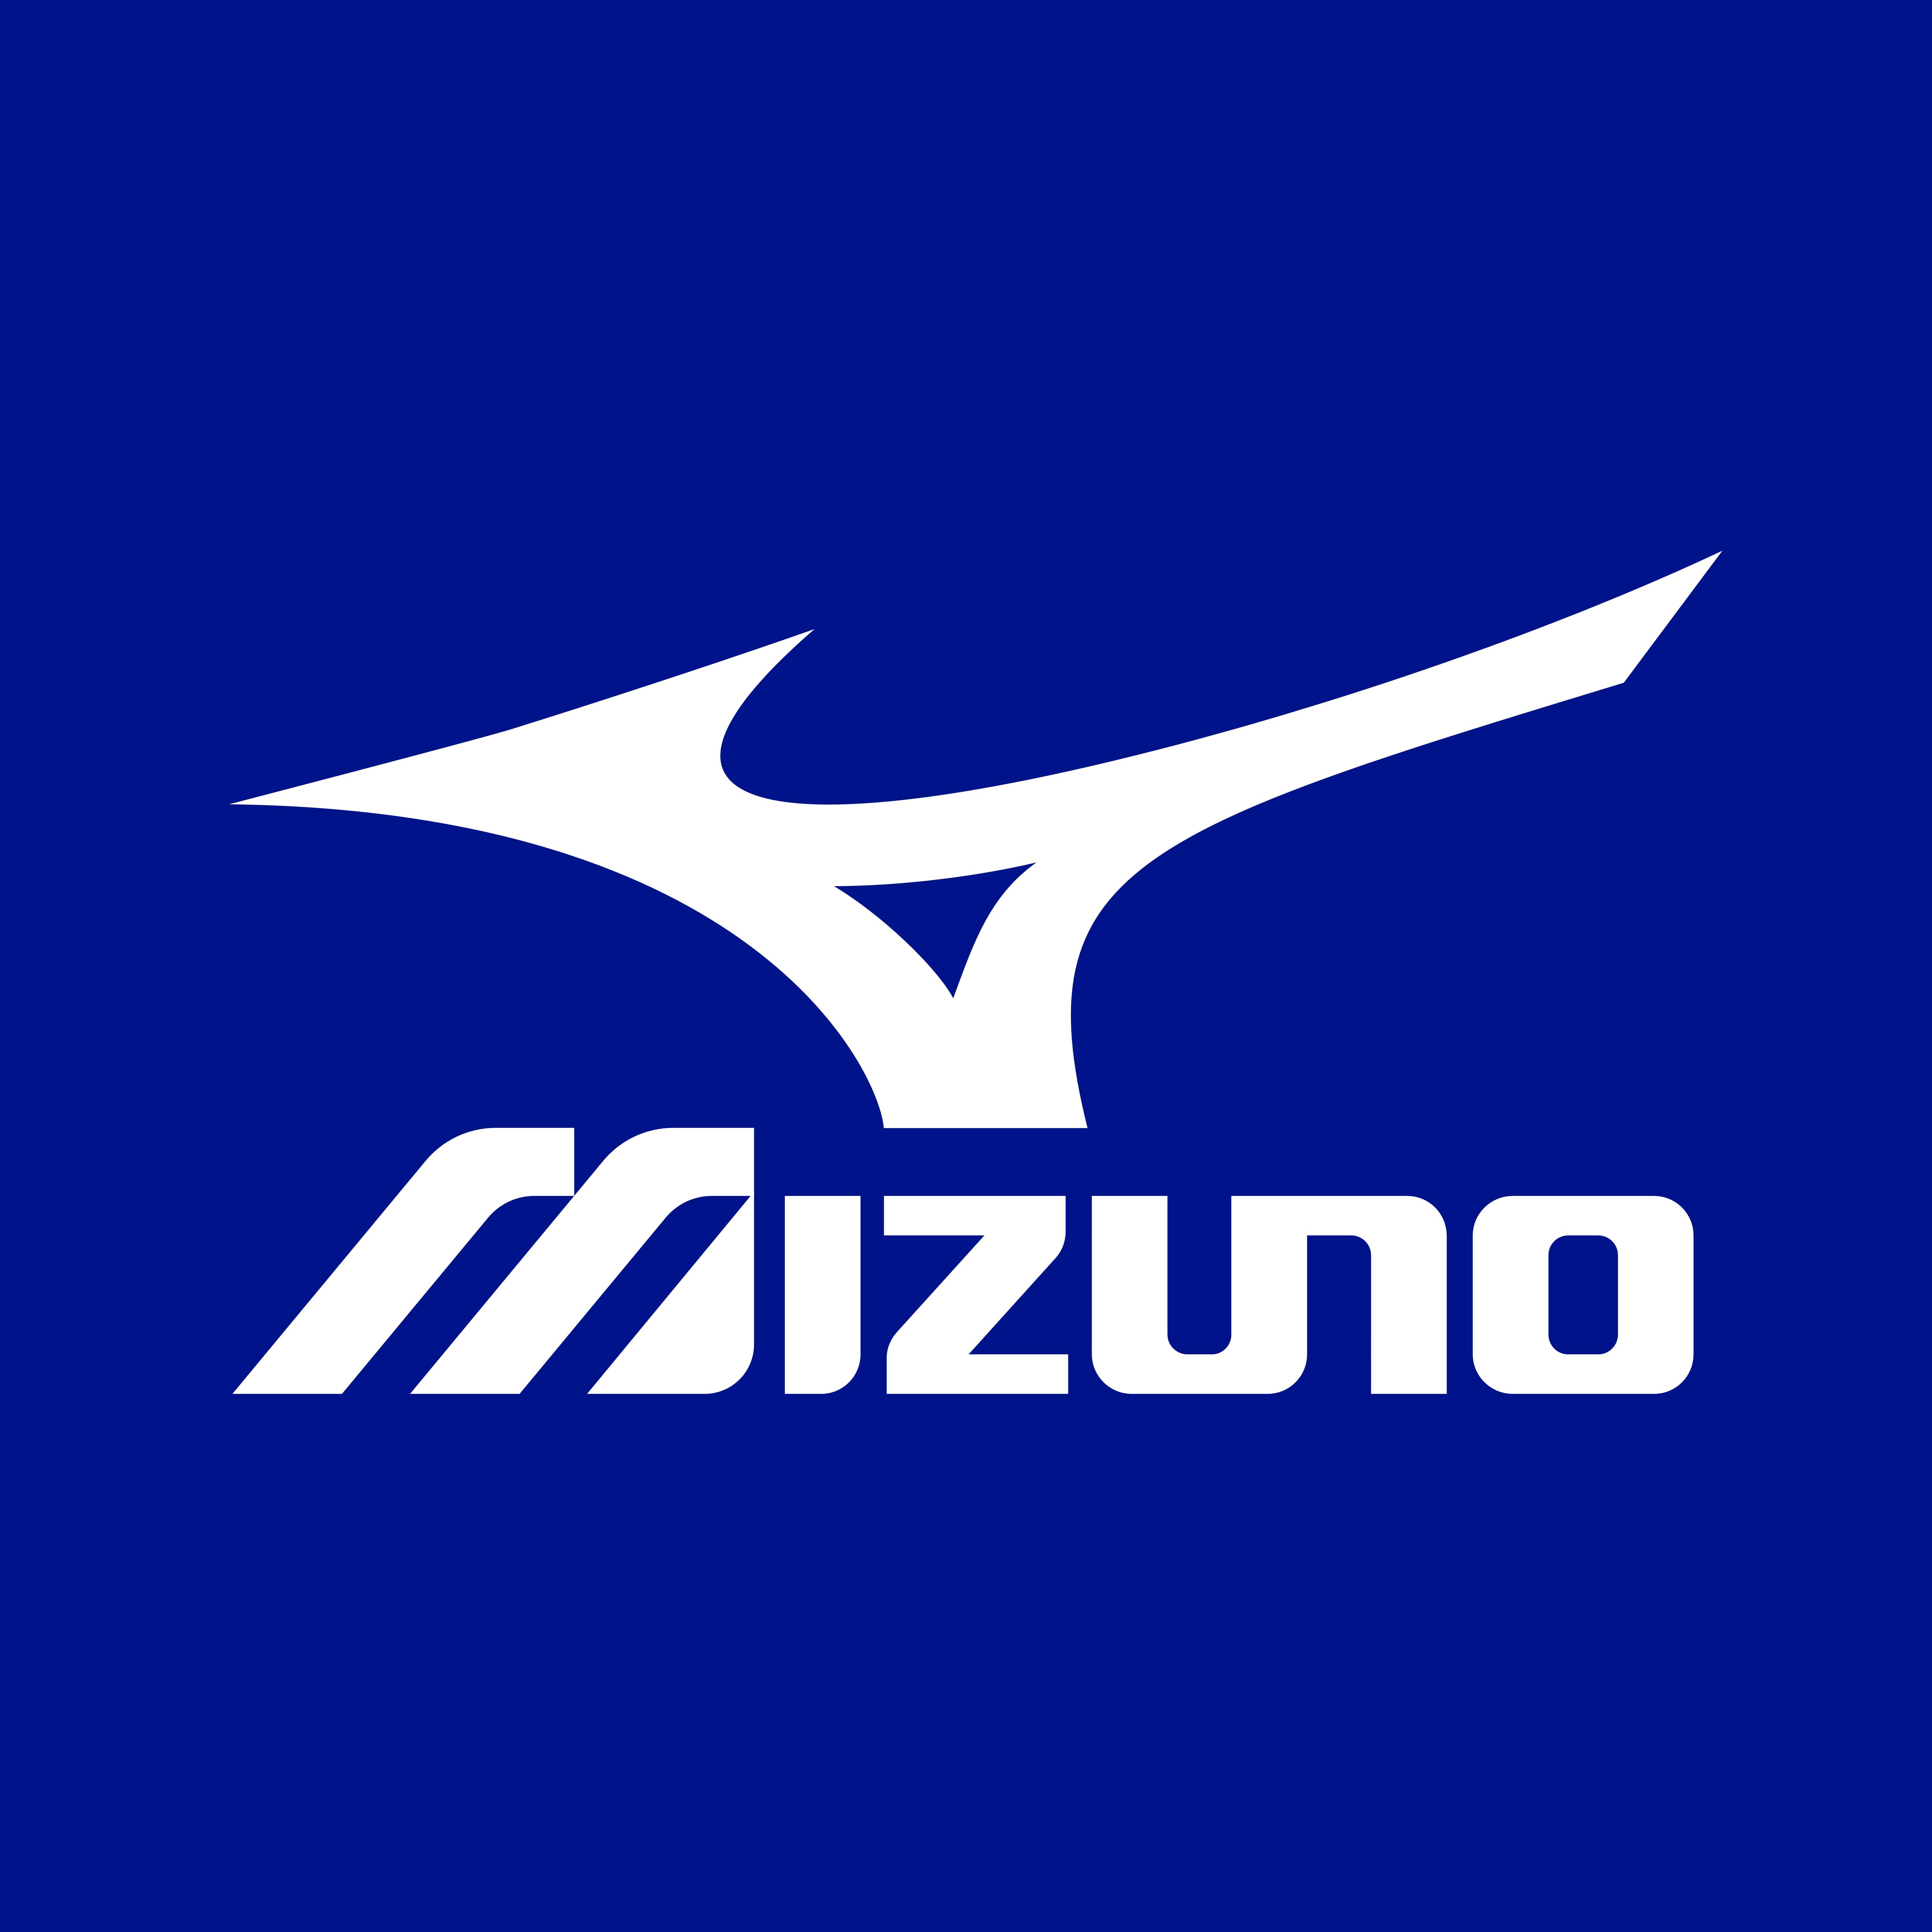 About Mizuno